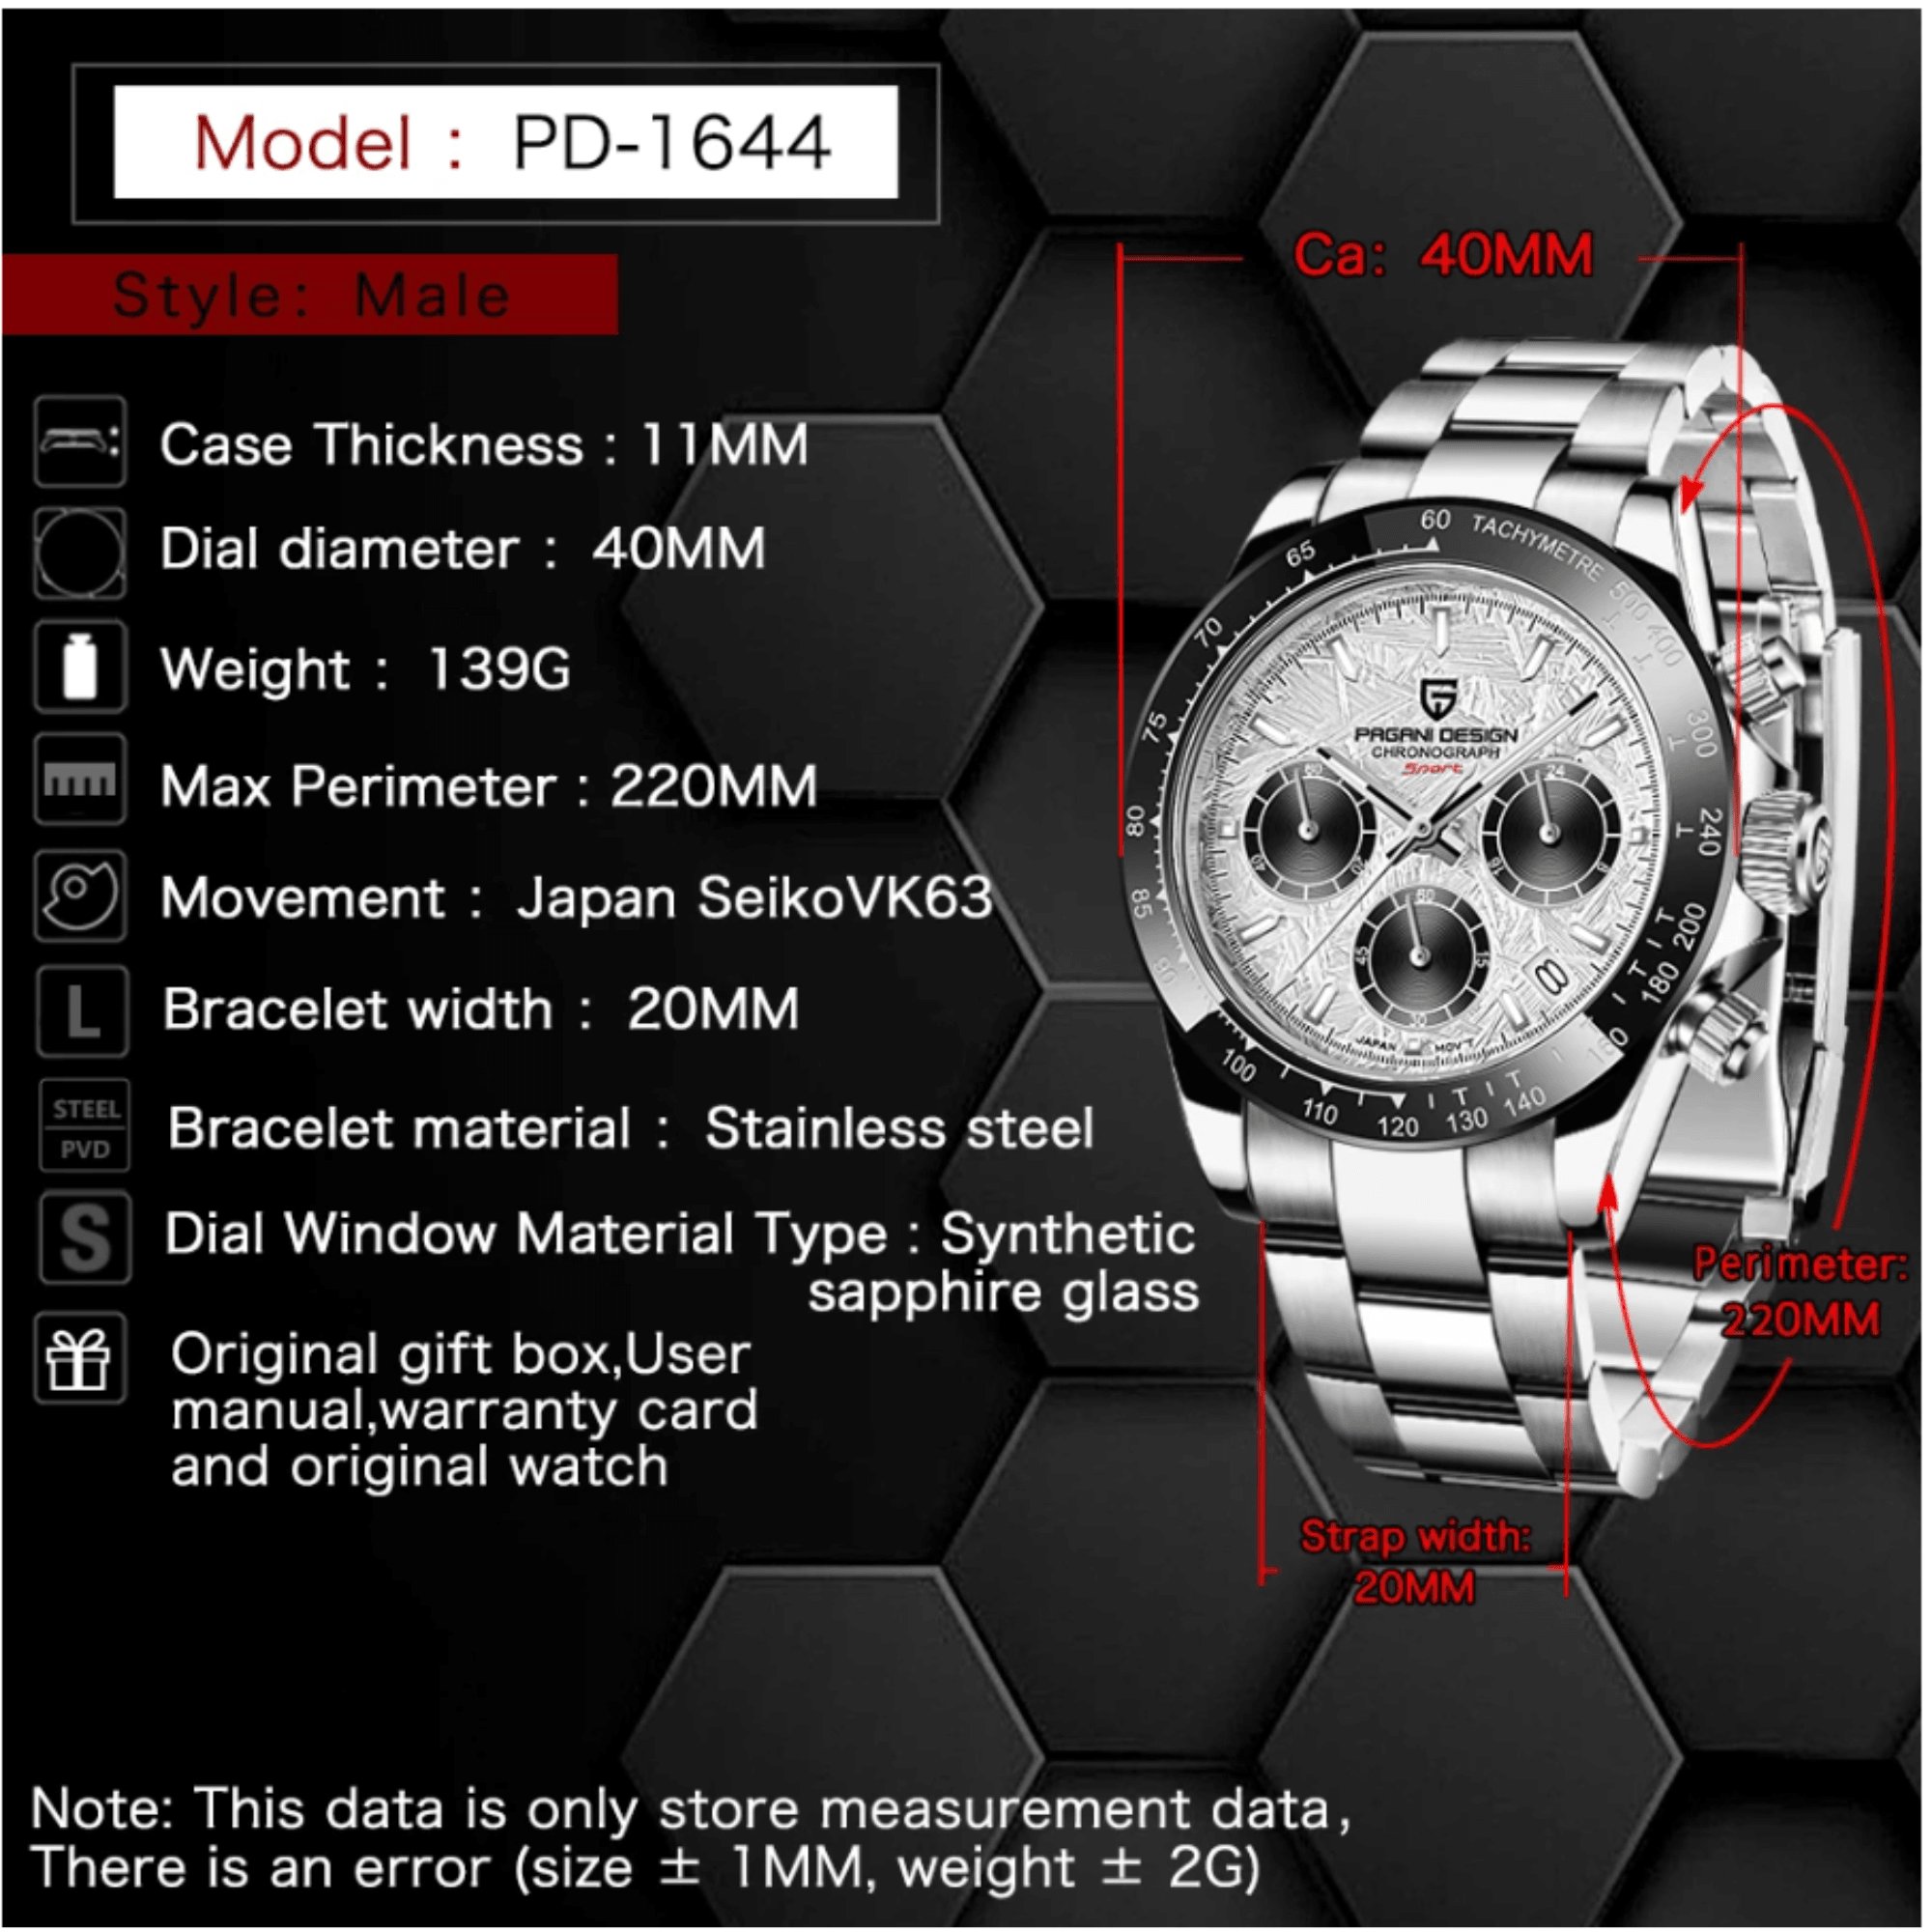 Pagani Design PD-1644 Daytona Chronograph Luxury Meca-quartz Movement